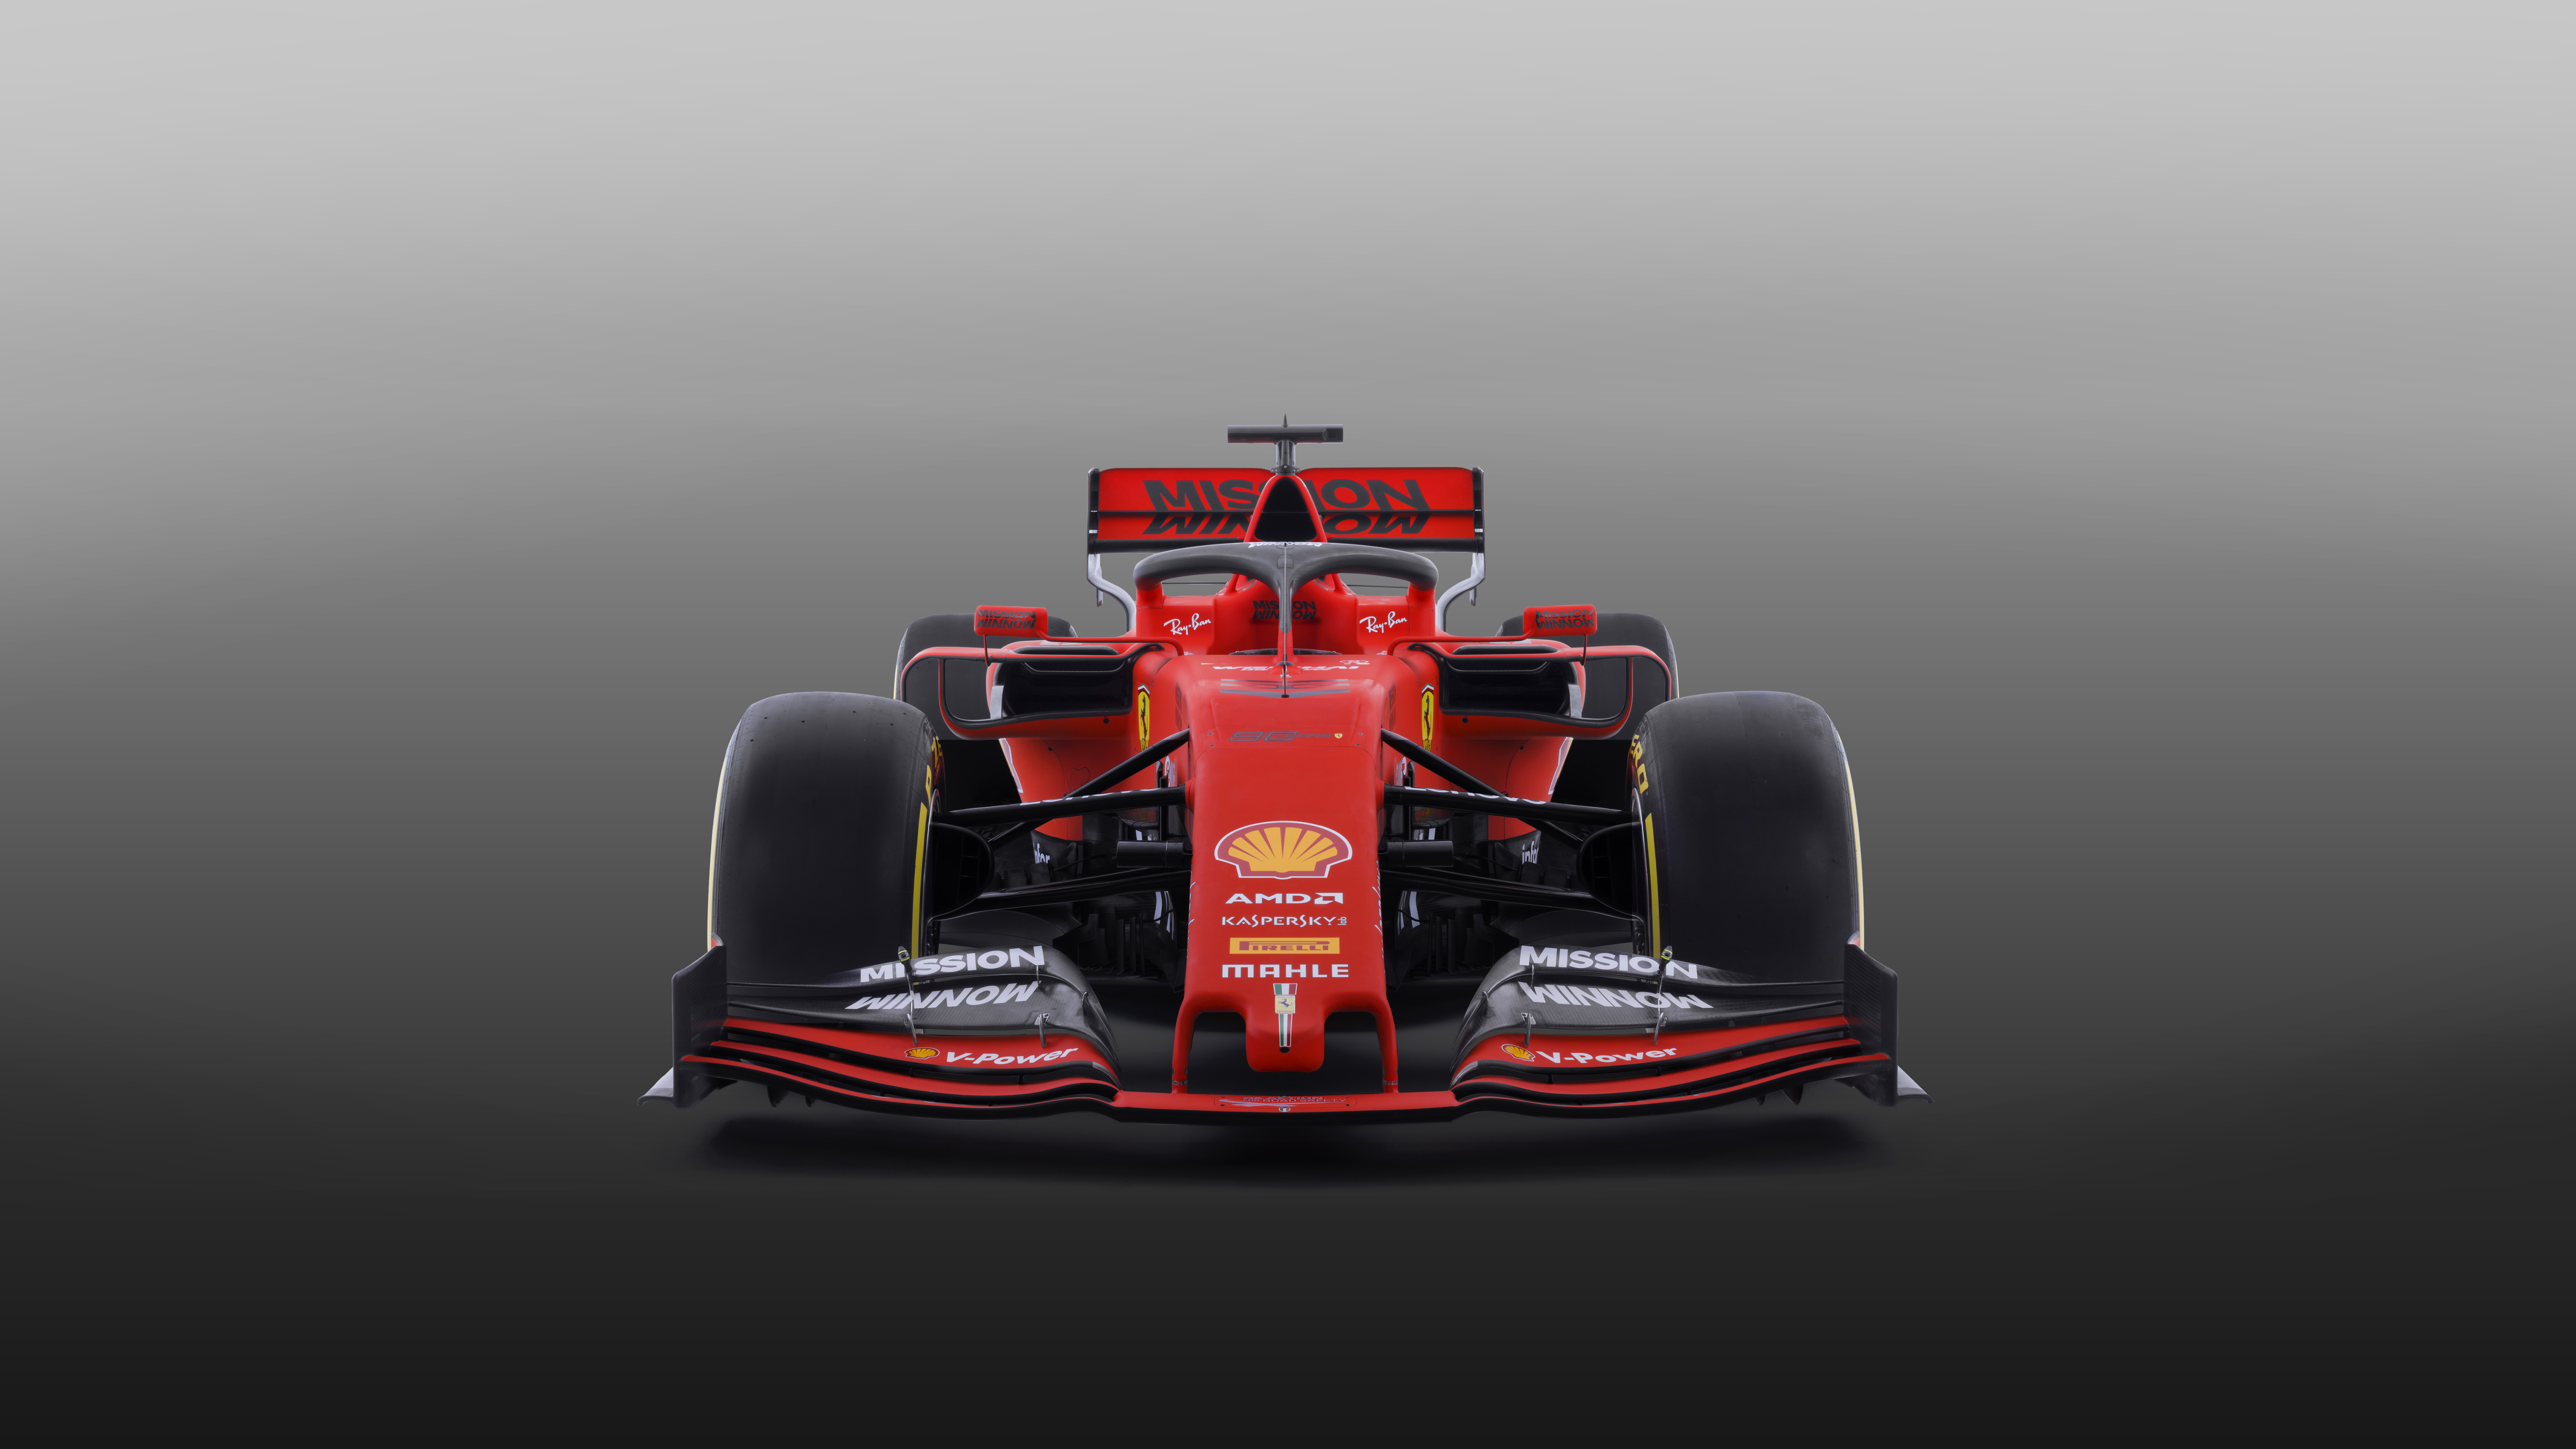 Ferrari SF90 Formula 1 2019 5K Wallpaper HD Car Wallpapers ID 12026